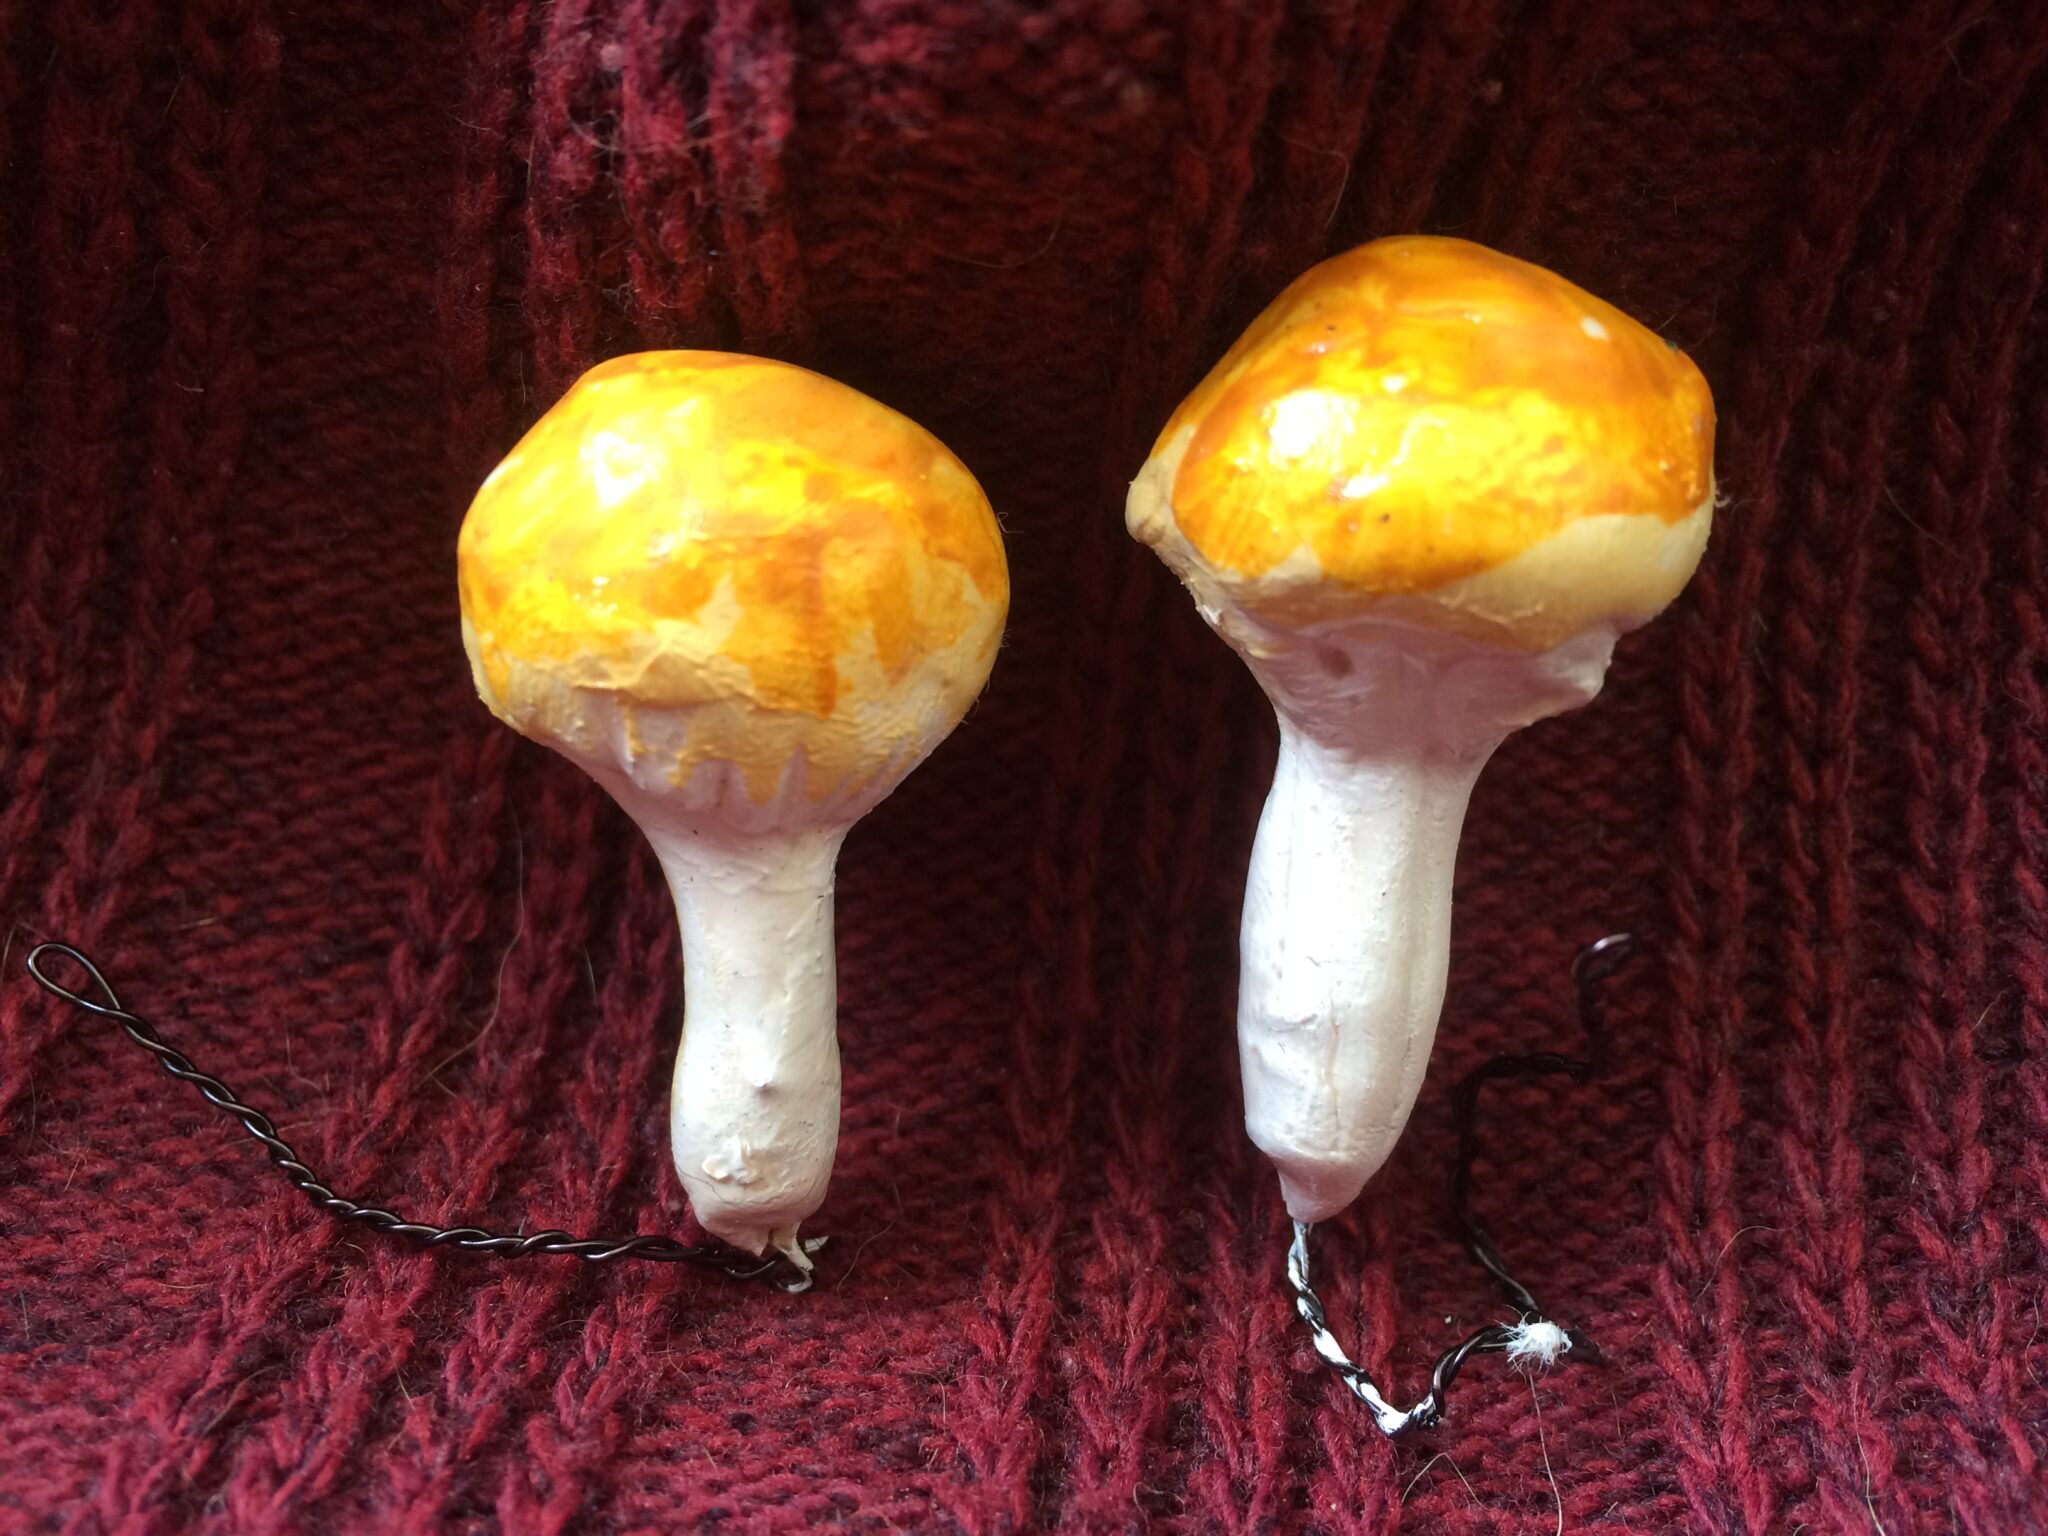 Små svampar som dekoration